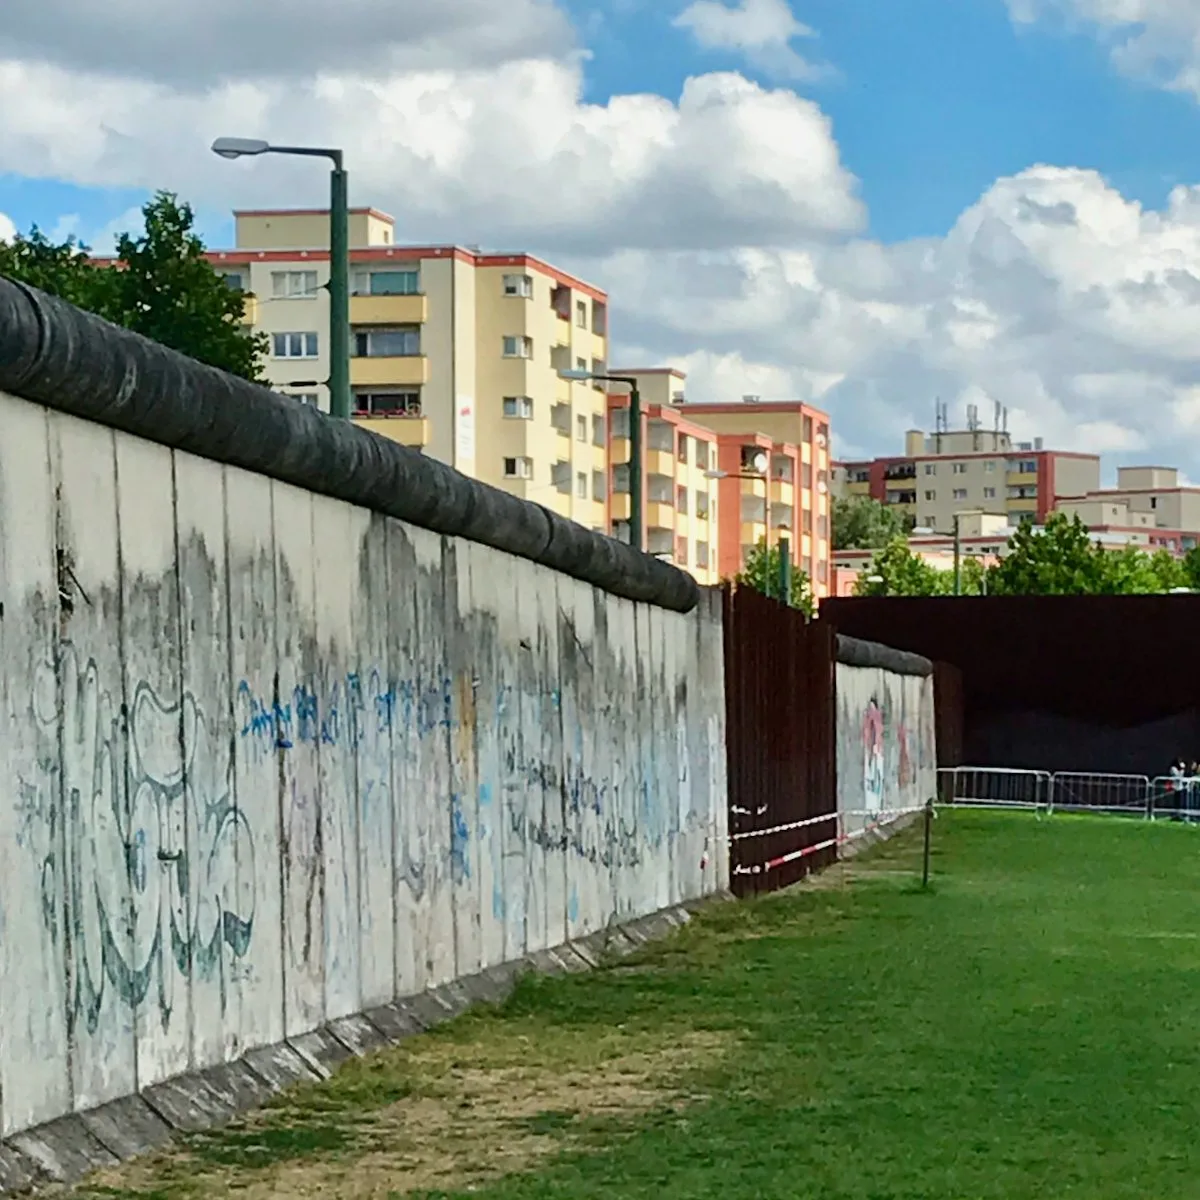 The Berlin Wall Memorial in Germany.